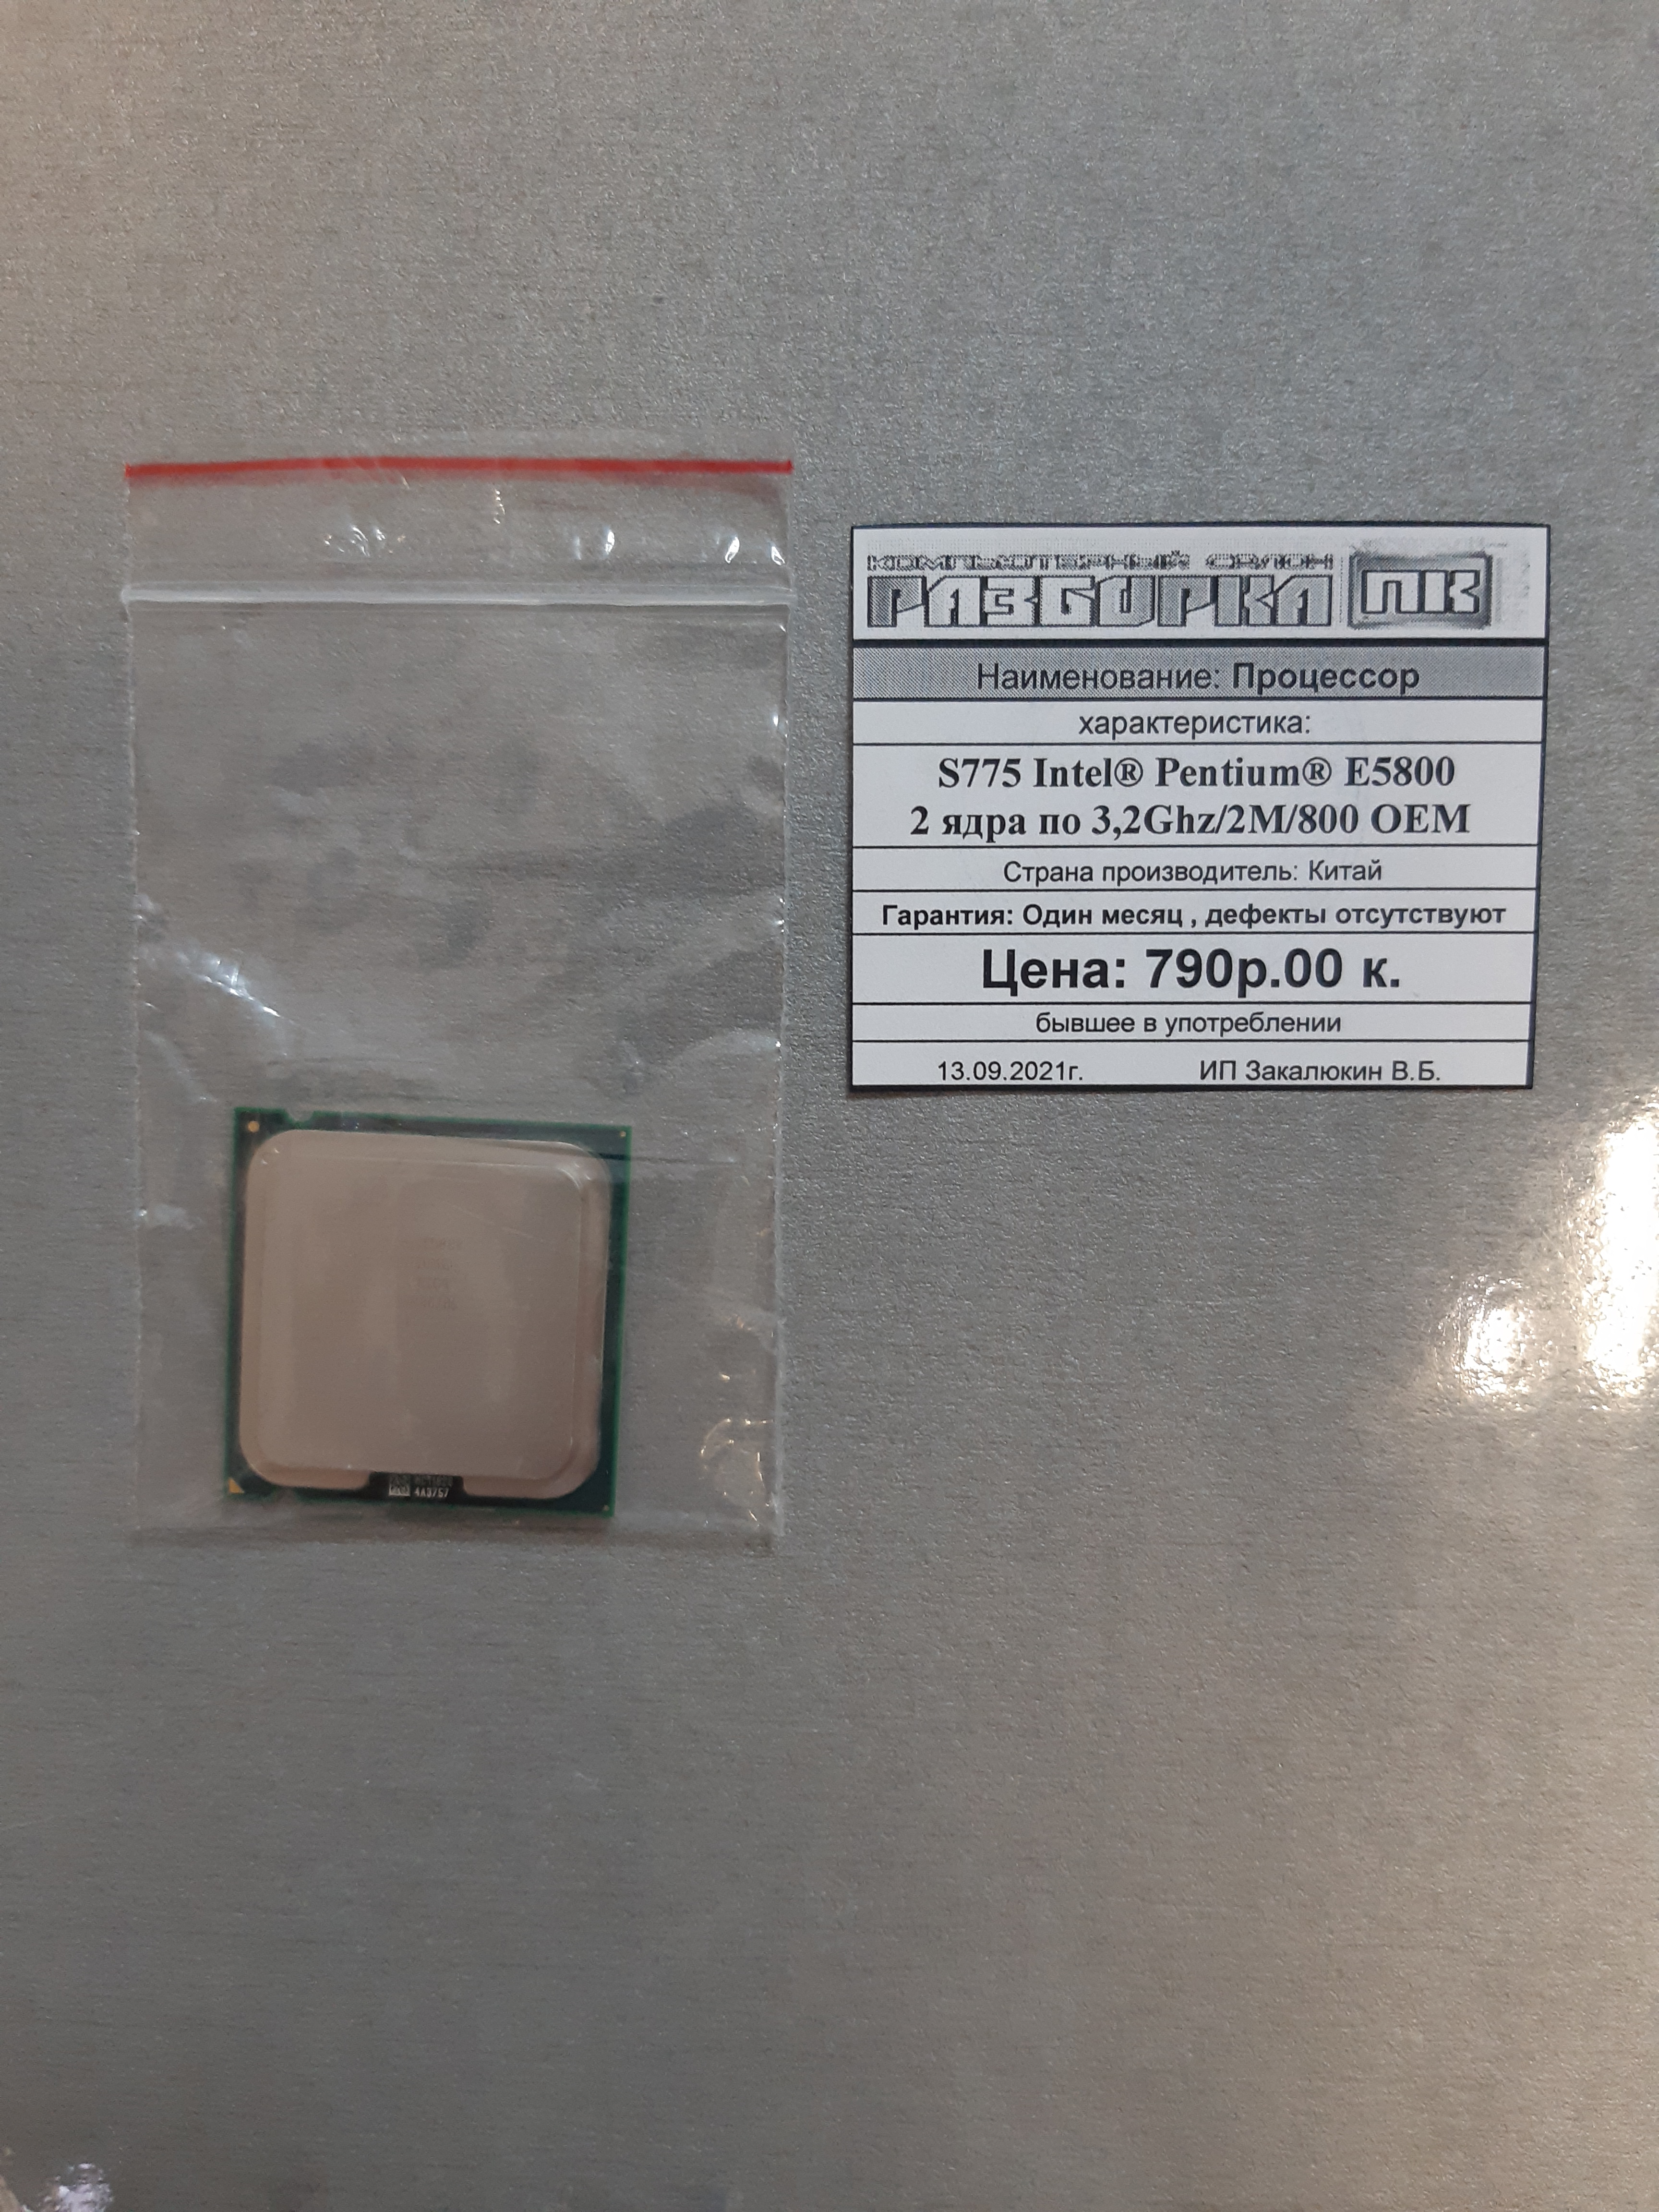 Процессор S775 Intel® Pentium E5800